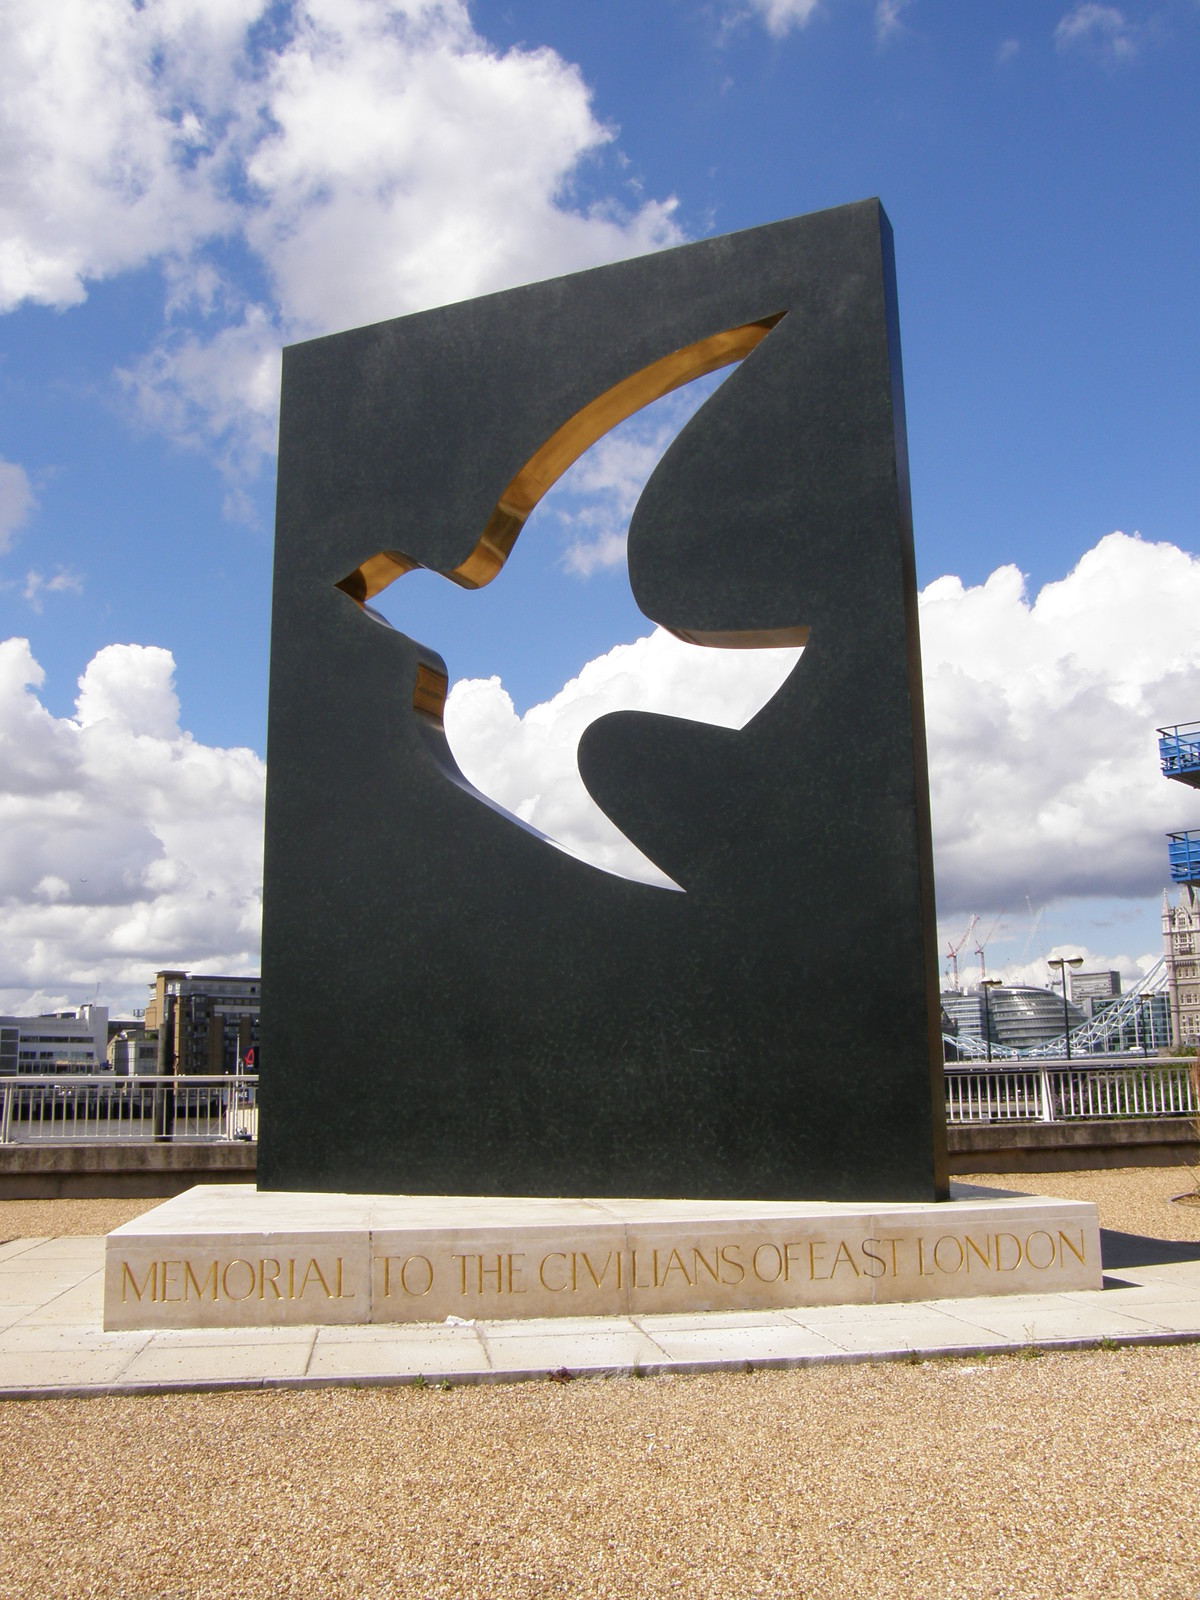 A commemorative sculpture in Cinnabar Wharf